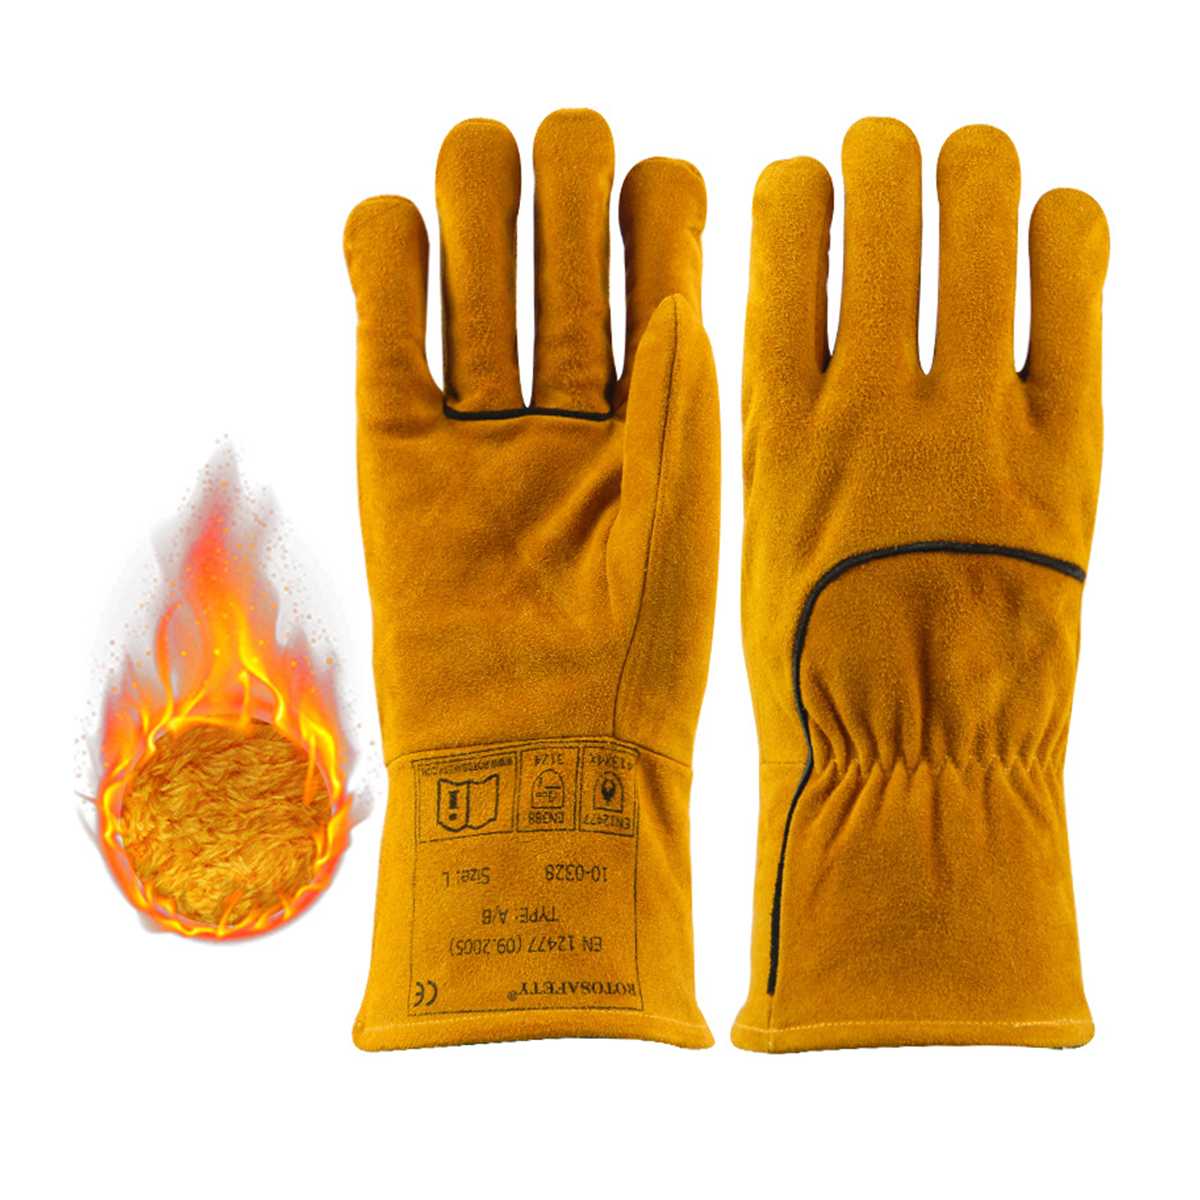 Welding Gloves Leather Forge Heat Resistant Welding Glove for Mig, Tig Welder, BBQ, Furnace